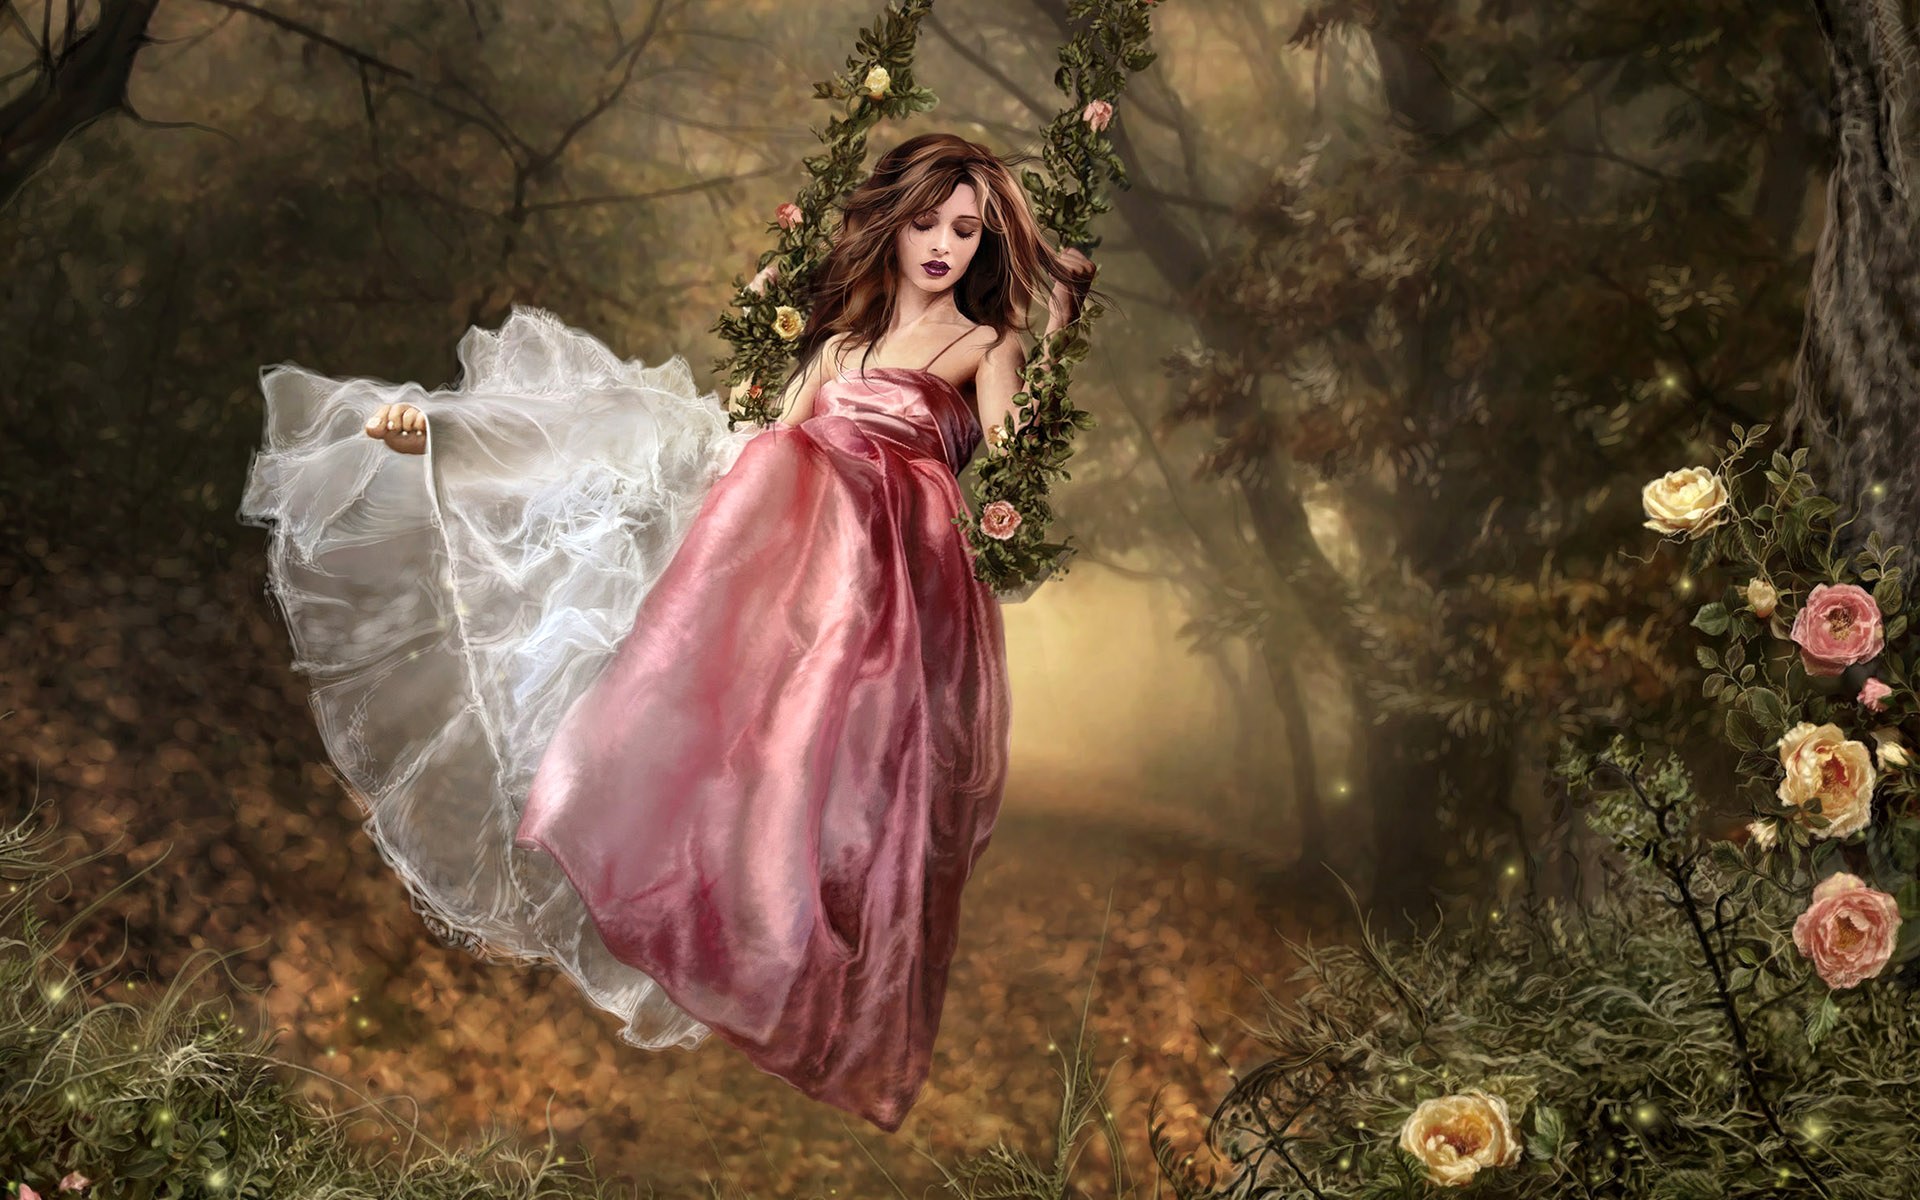 Fantasy woman in a lovely dress swinging on a rose vine swing.